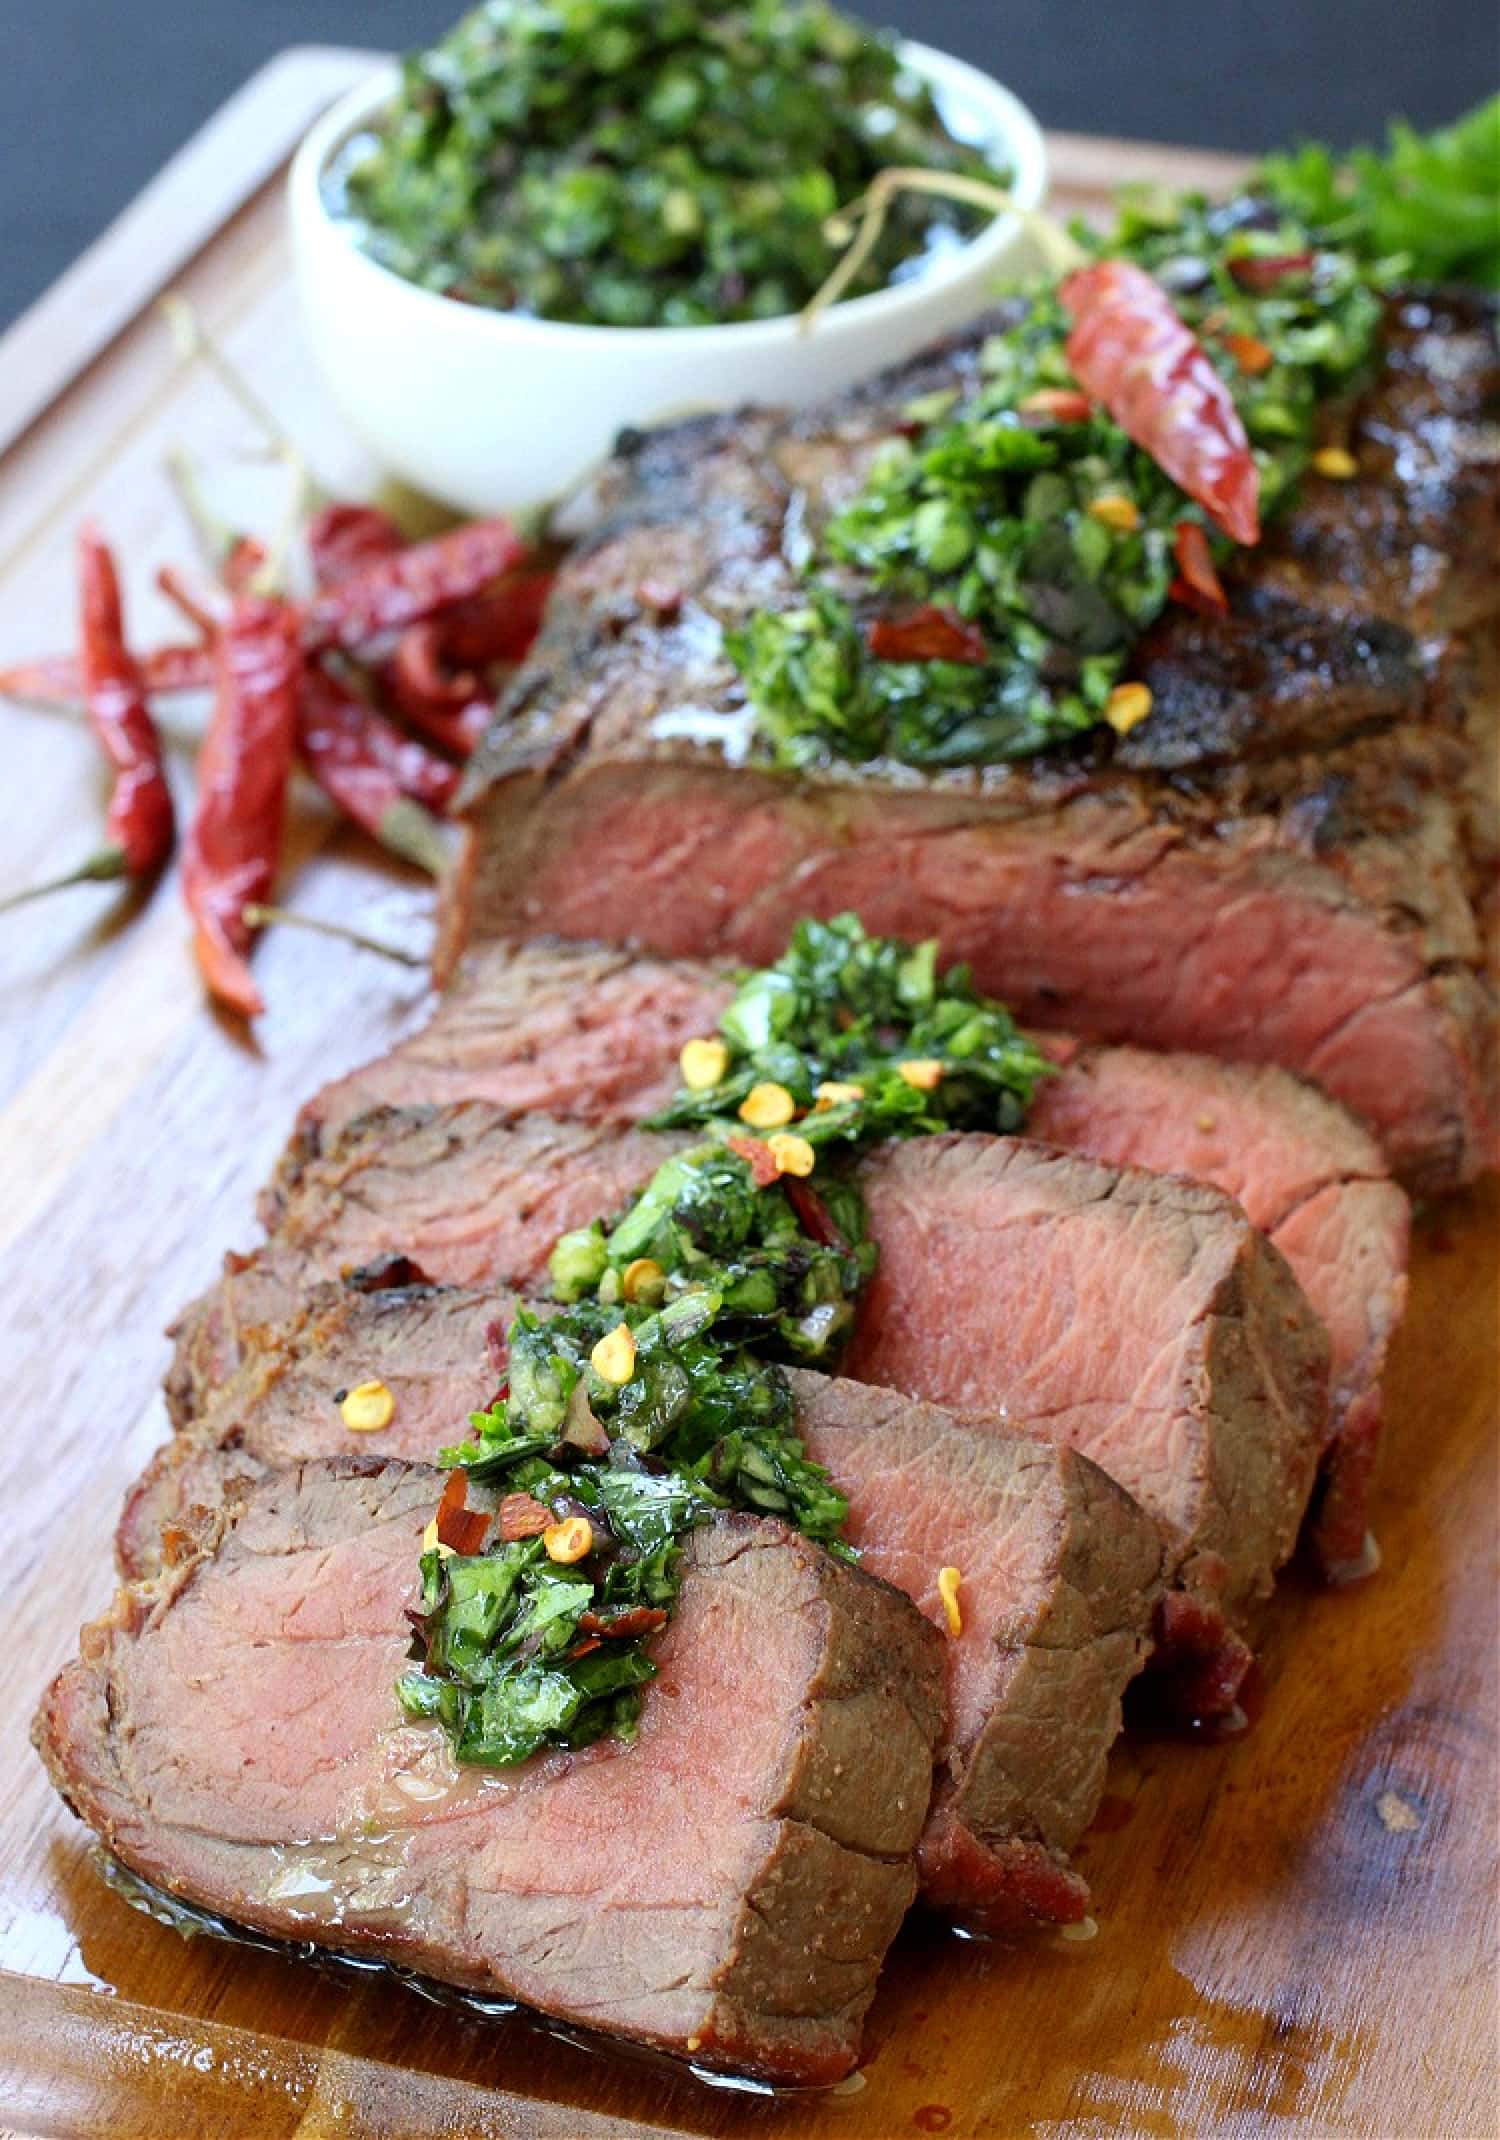 sliced steak with chimichurri sauce